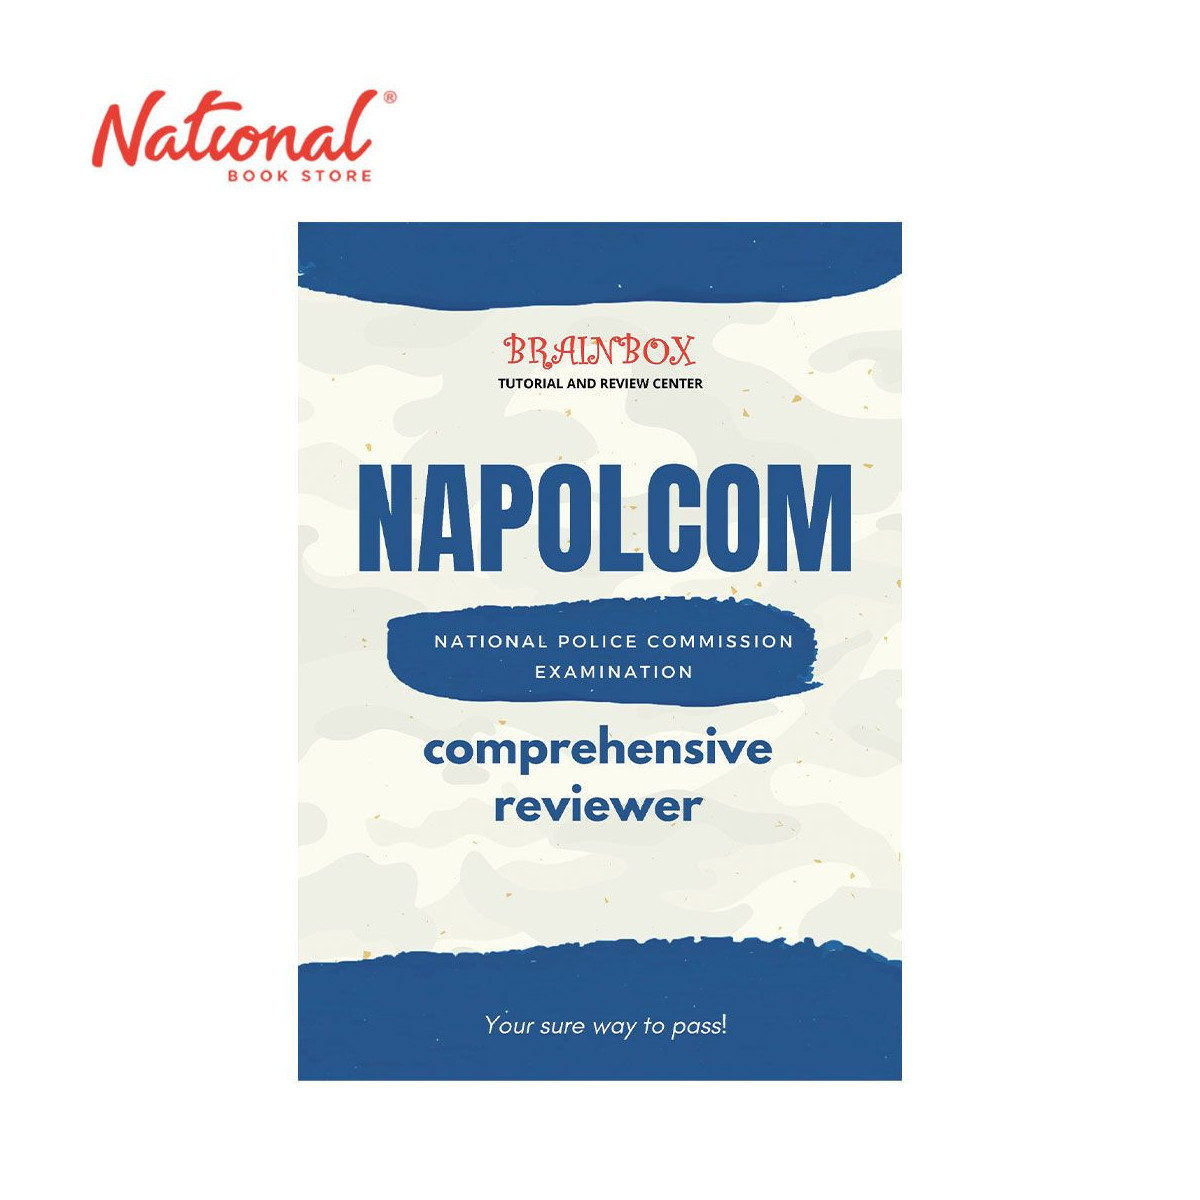 Brainbox NAPOLCOM Comprehensive Reviewer - Trade Paperback - Test Guides